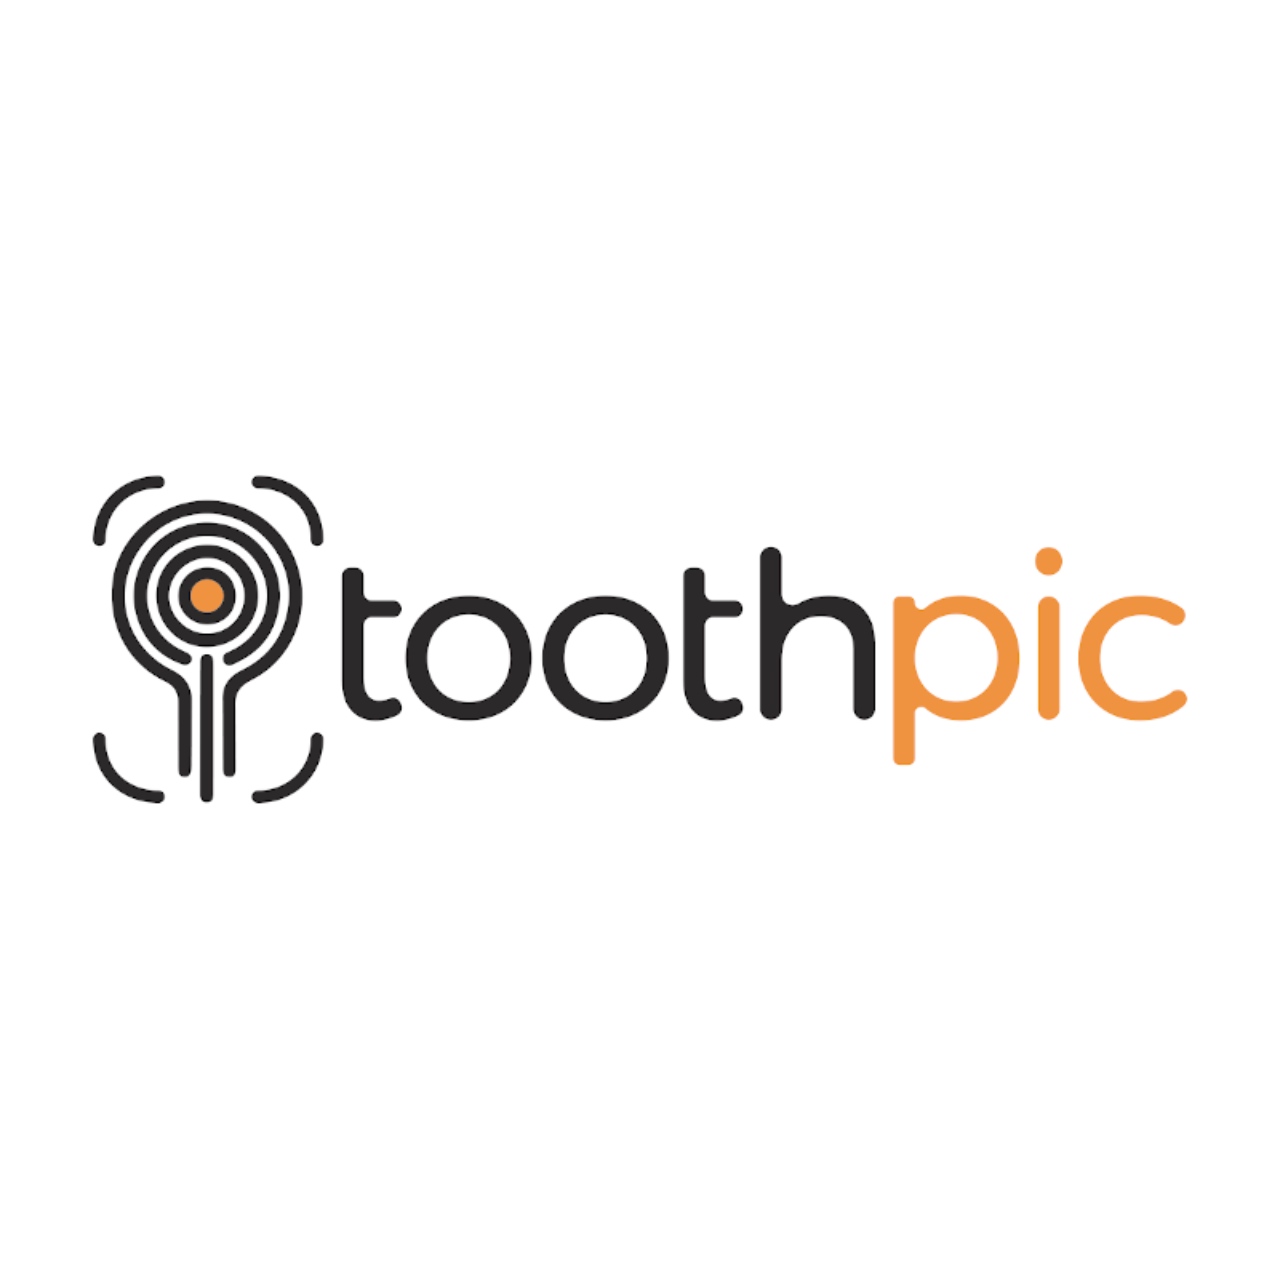 Toothpic